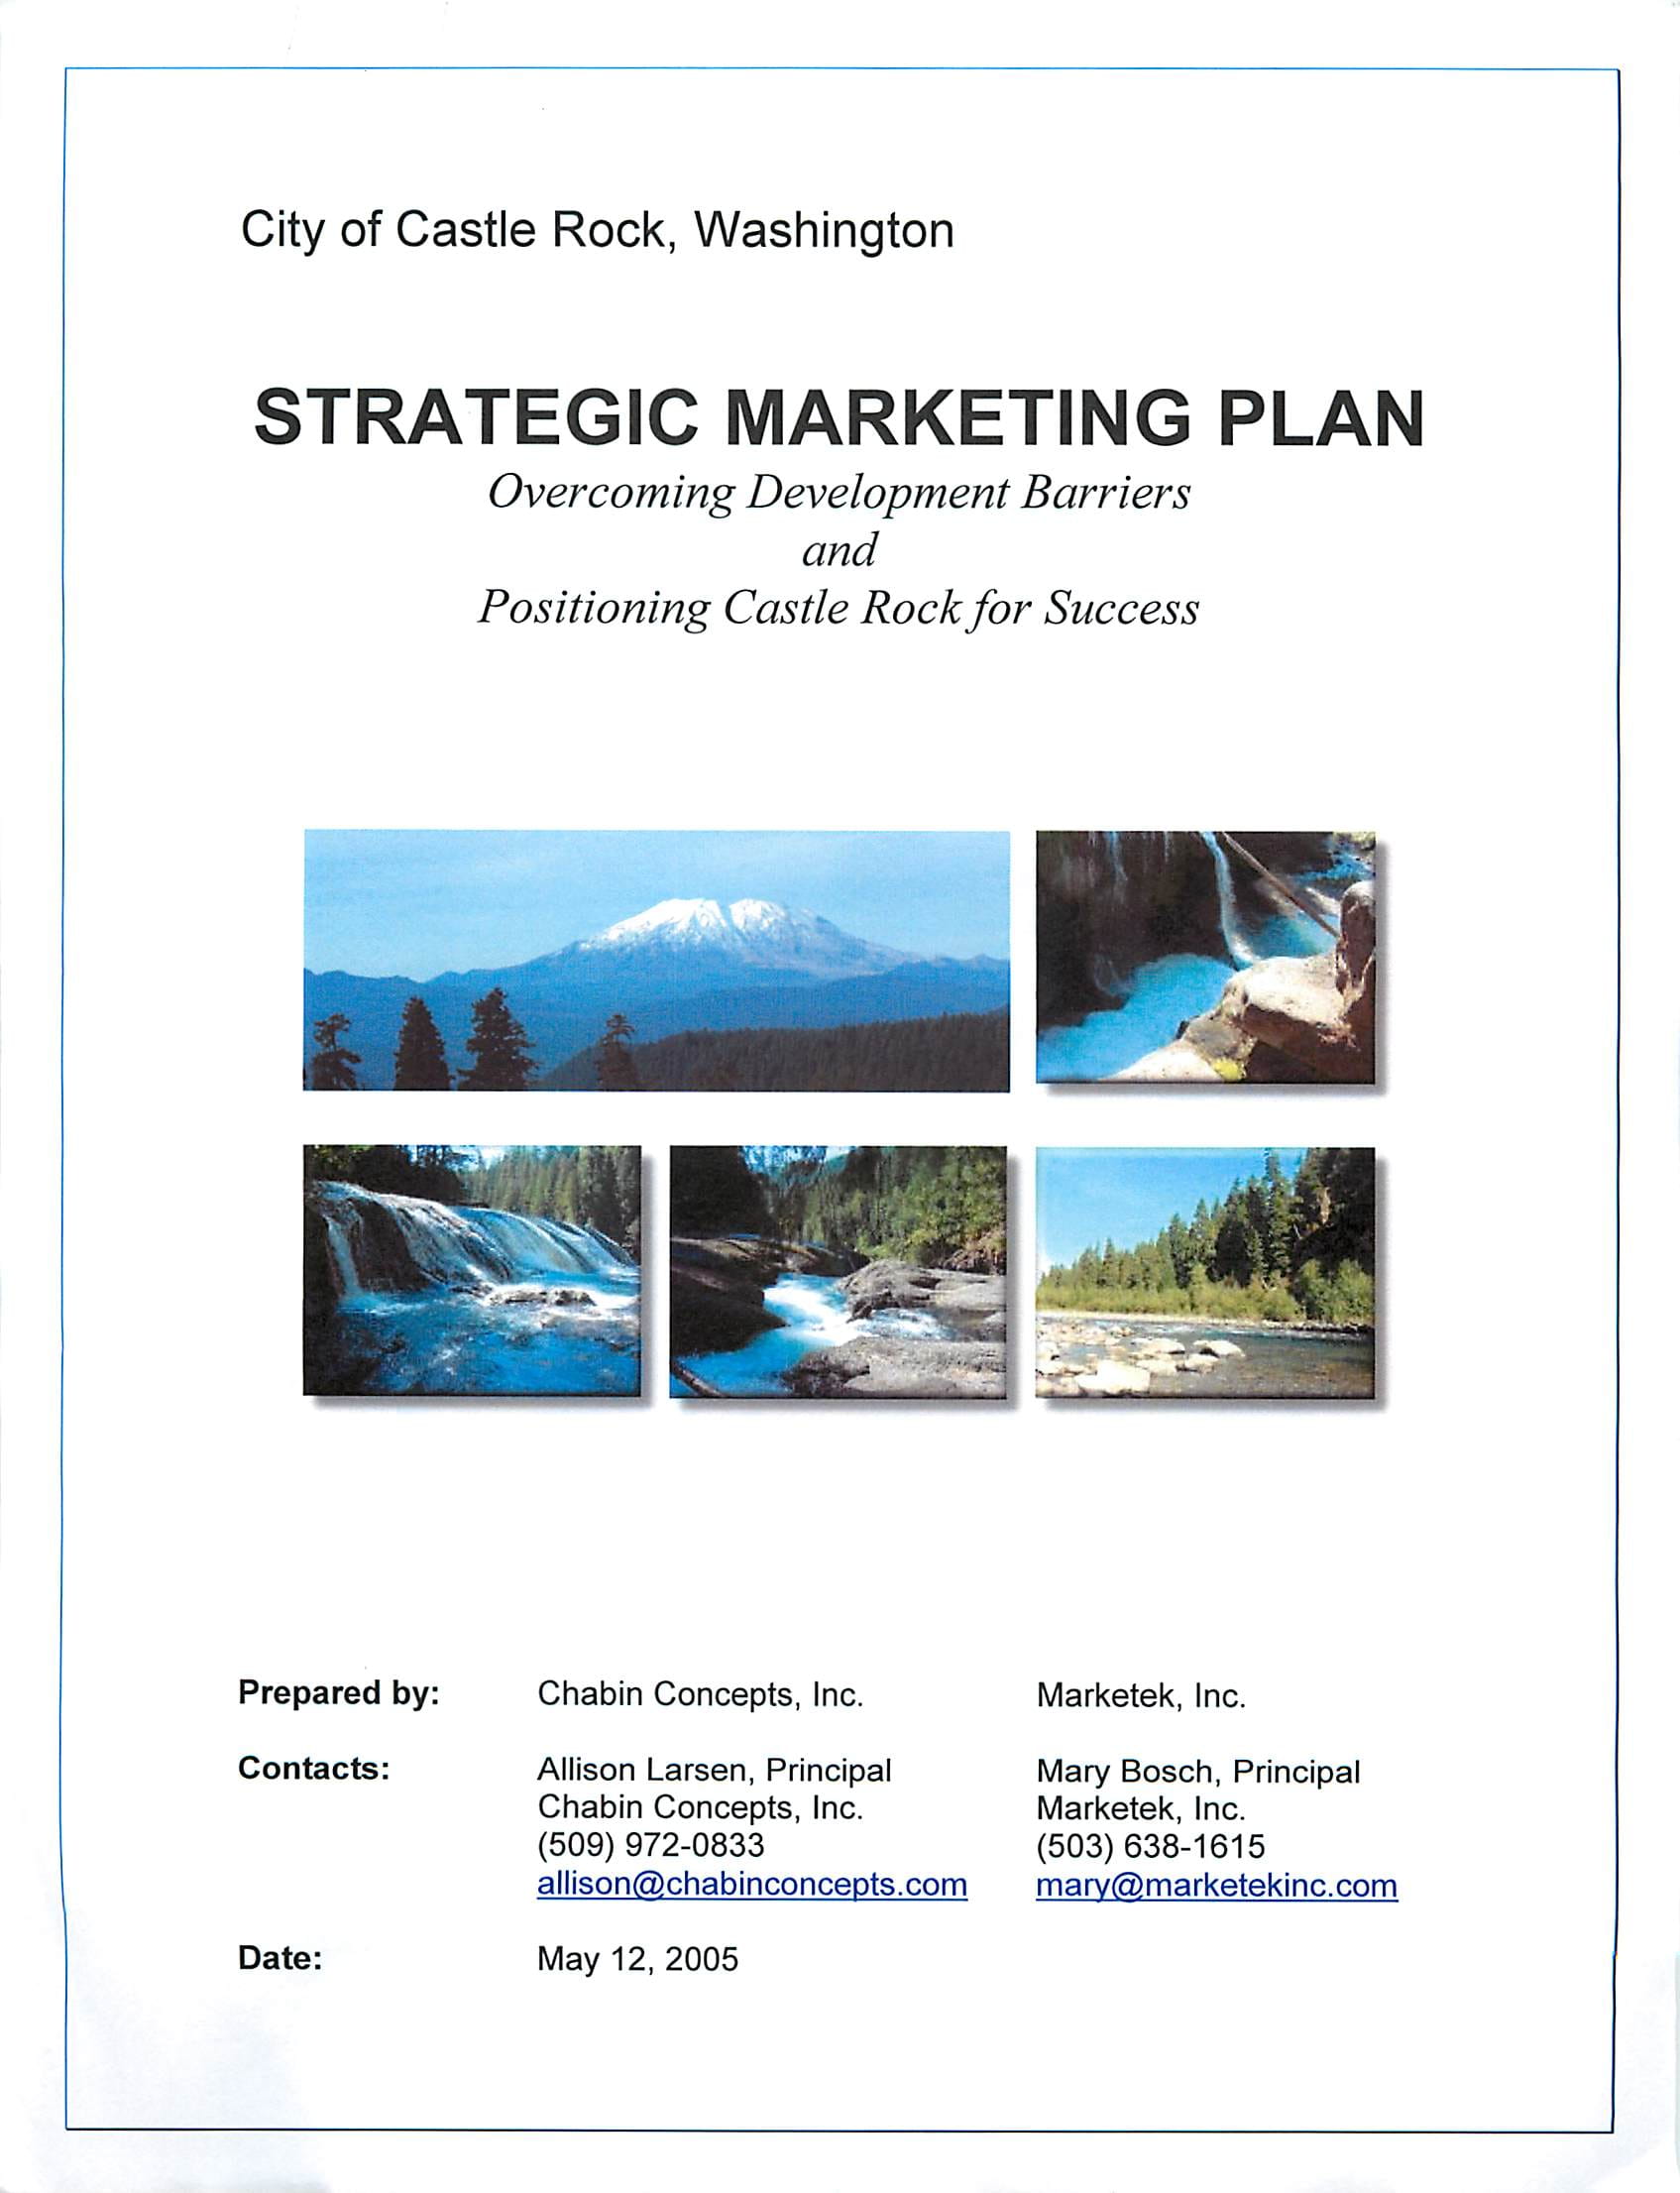 castle rock strategic marketing plan example